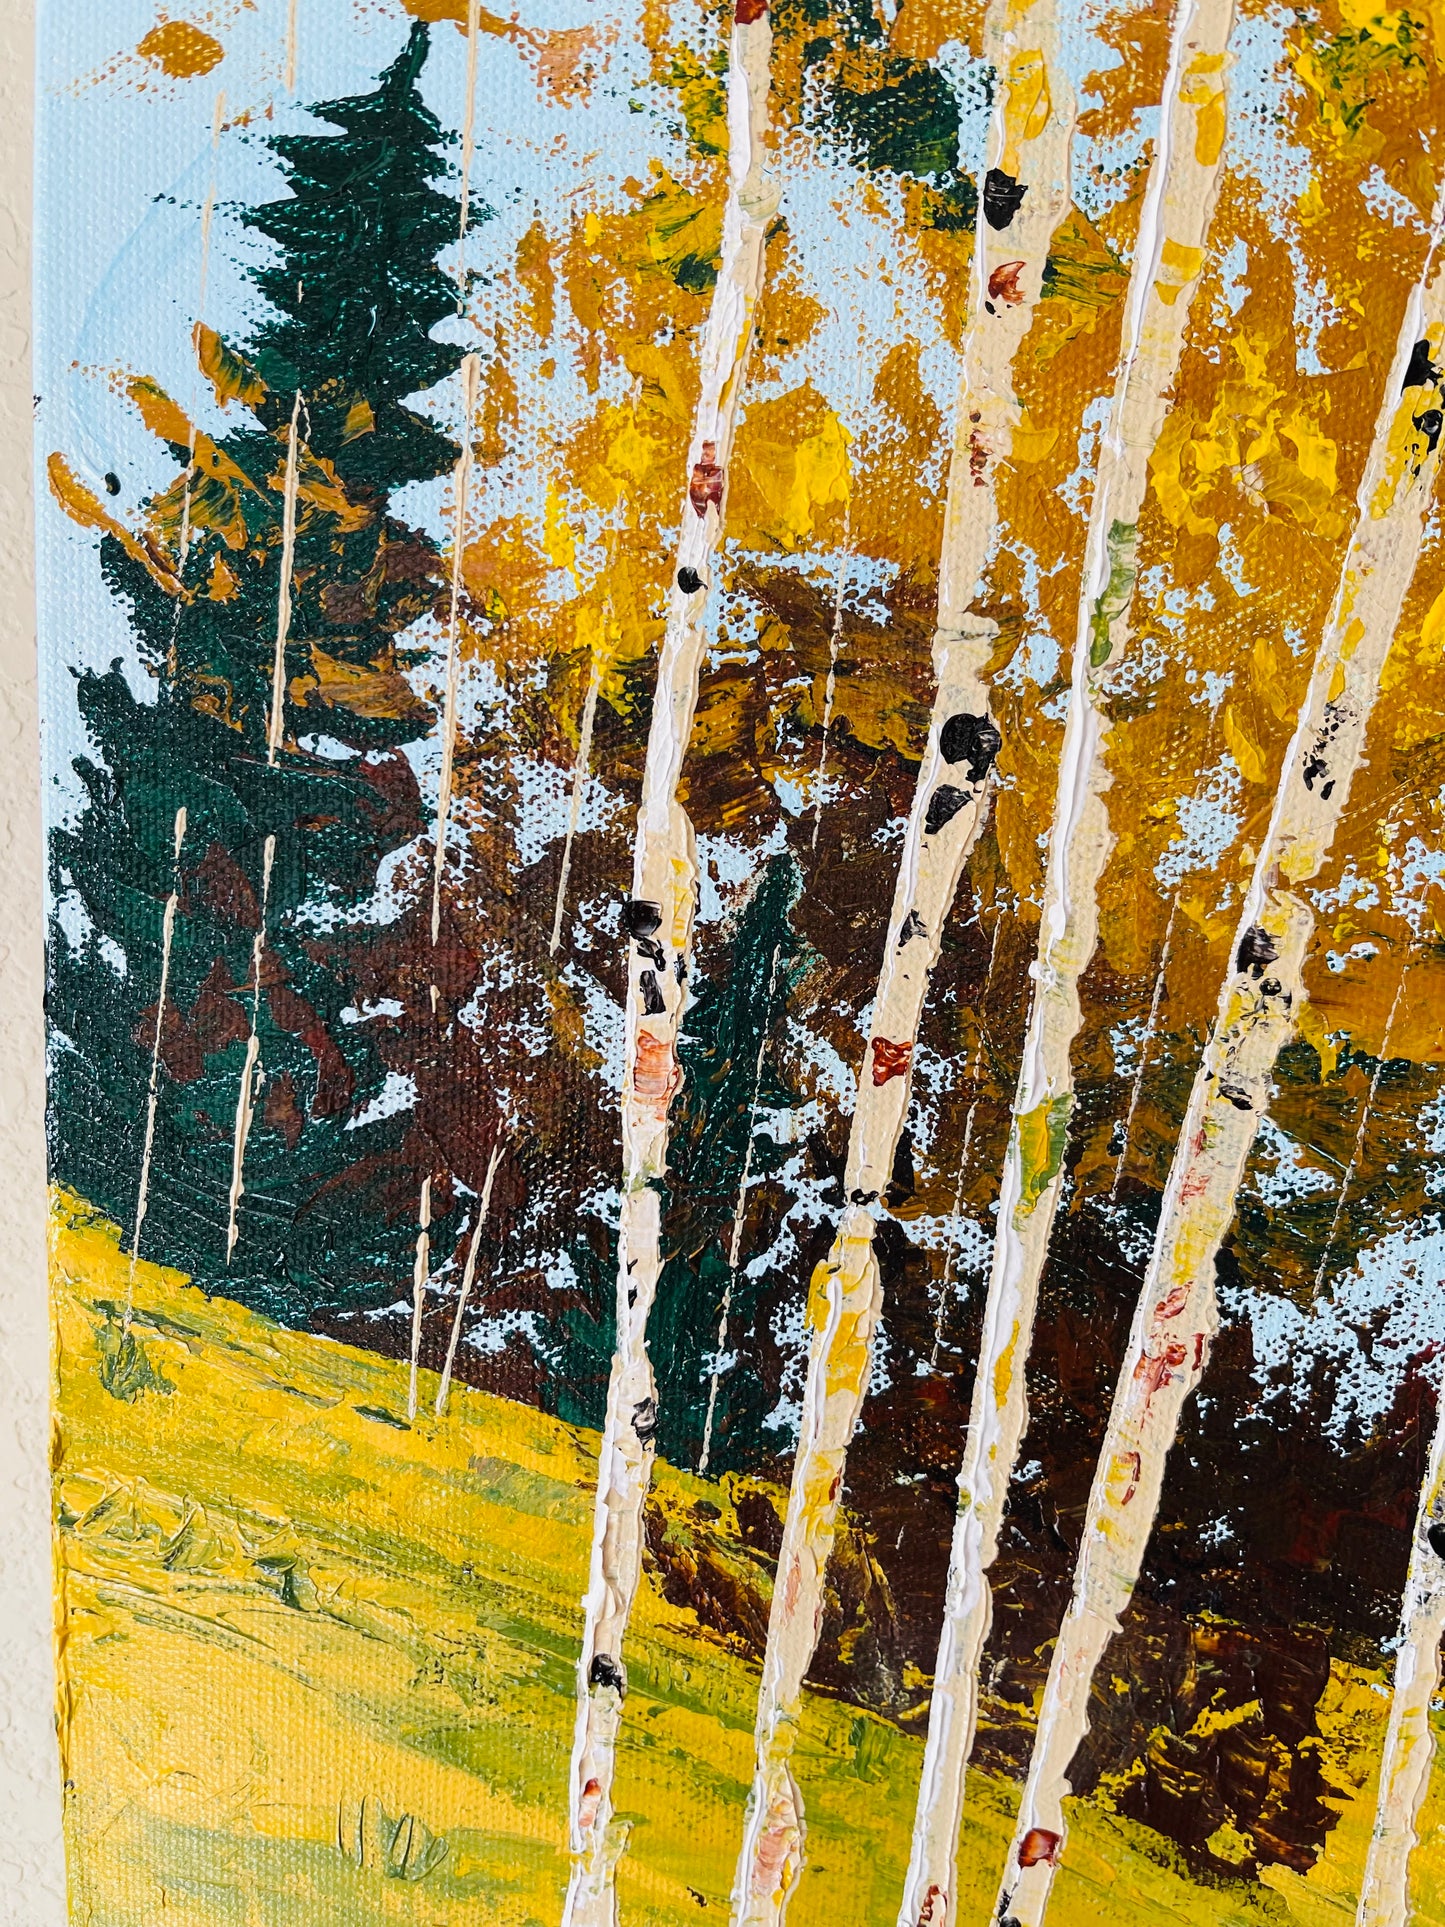 Slopes of Serenity - Colorado Fall colors